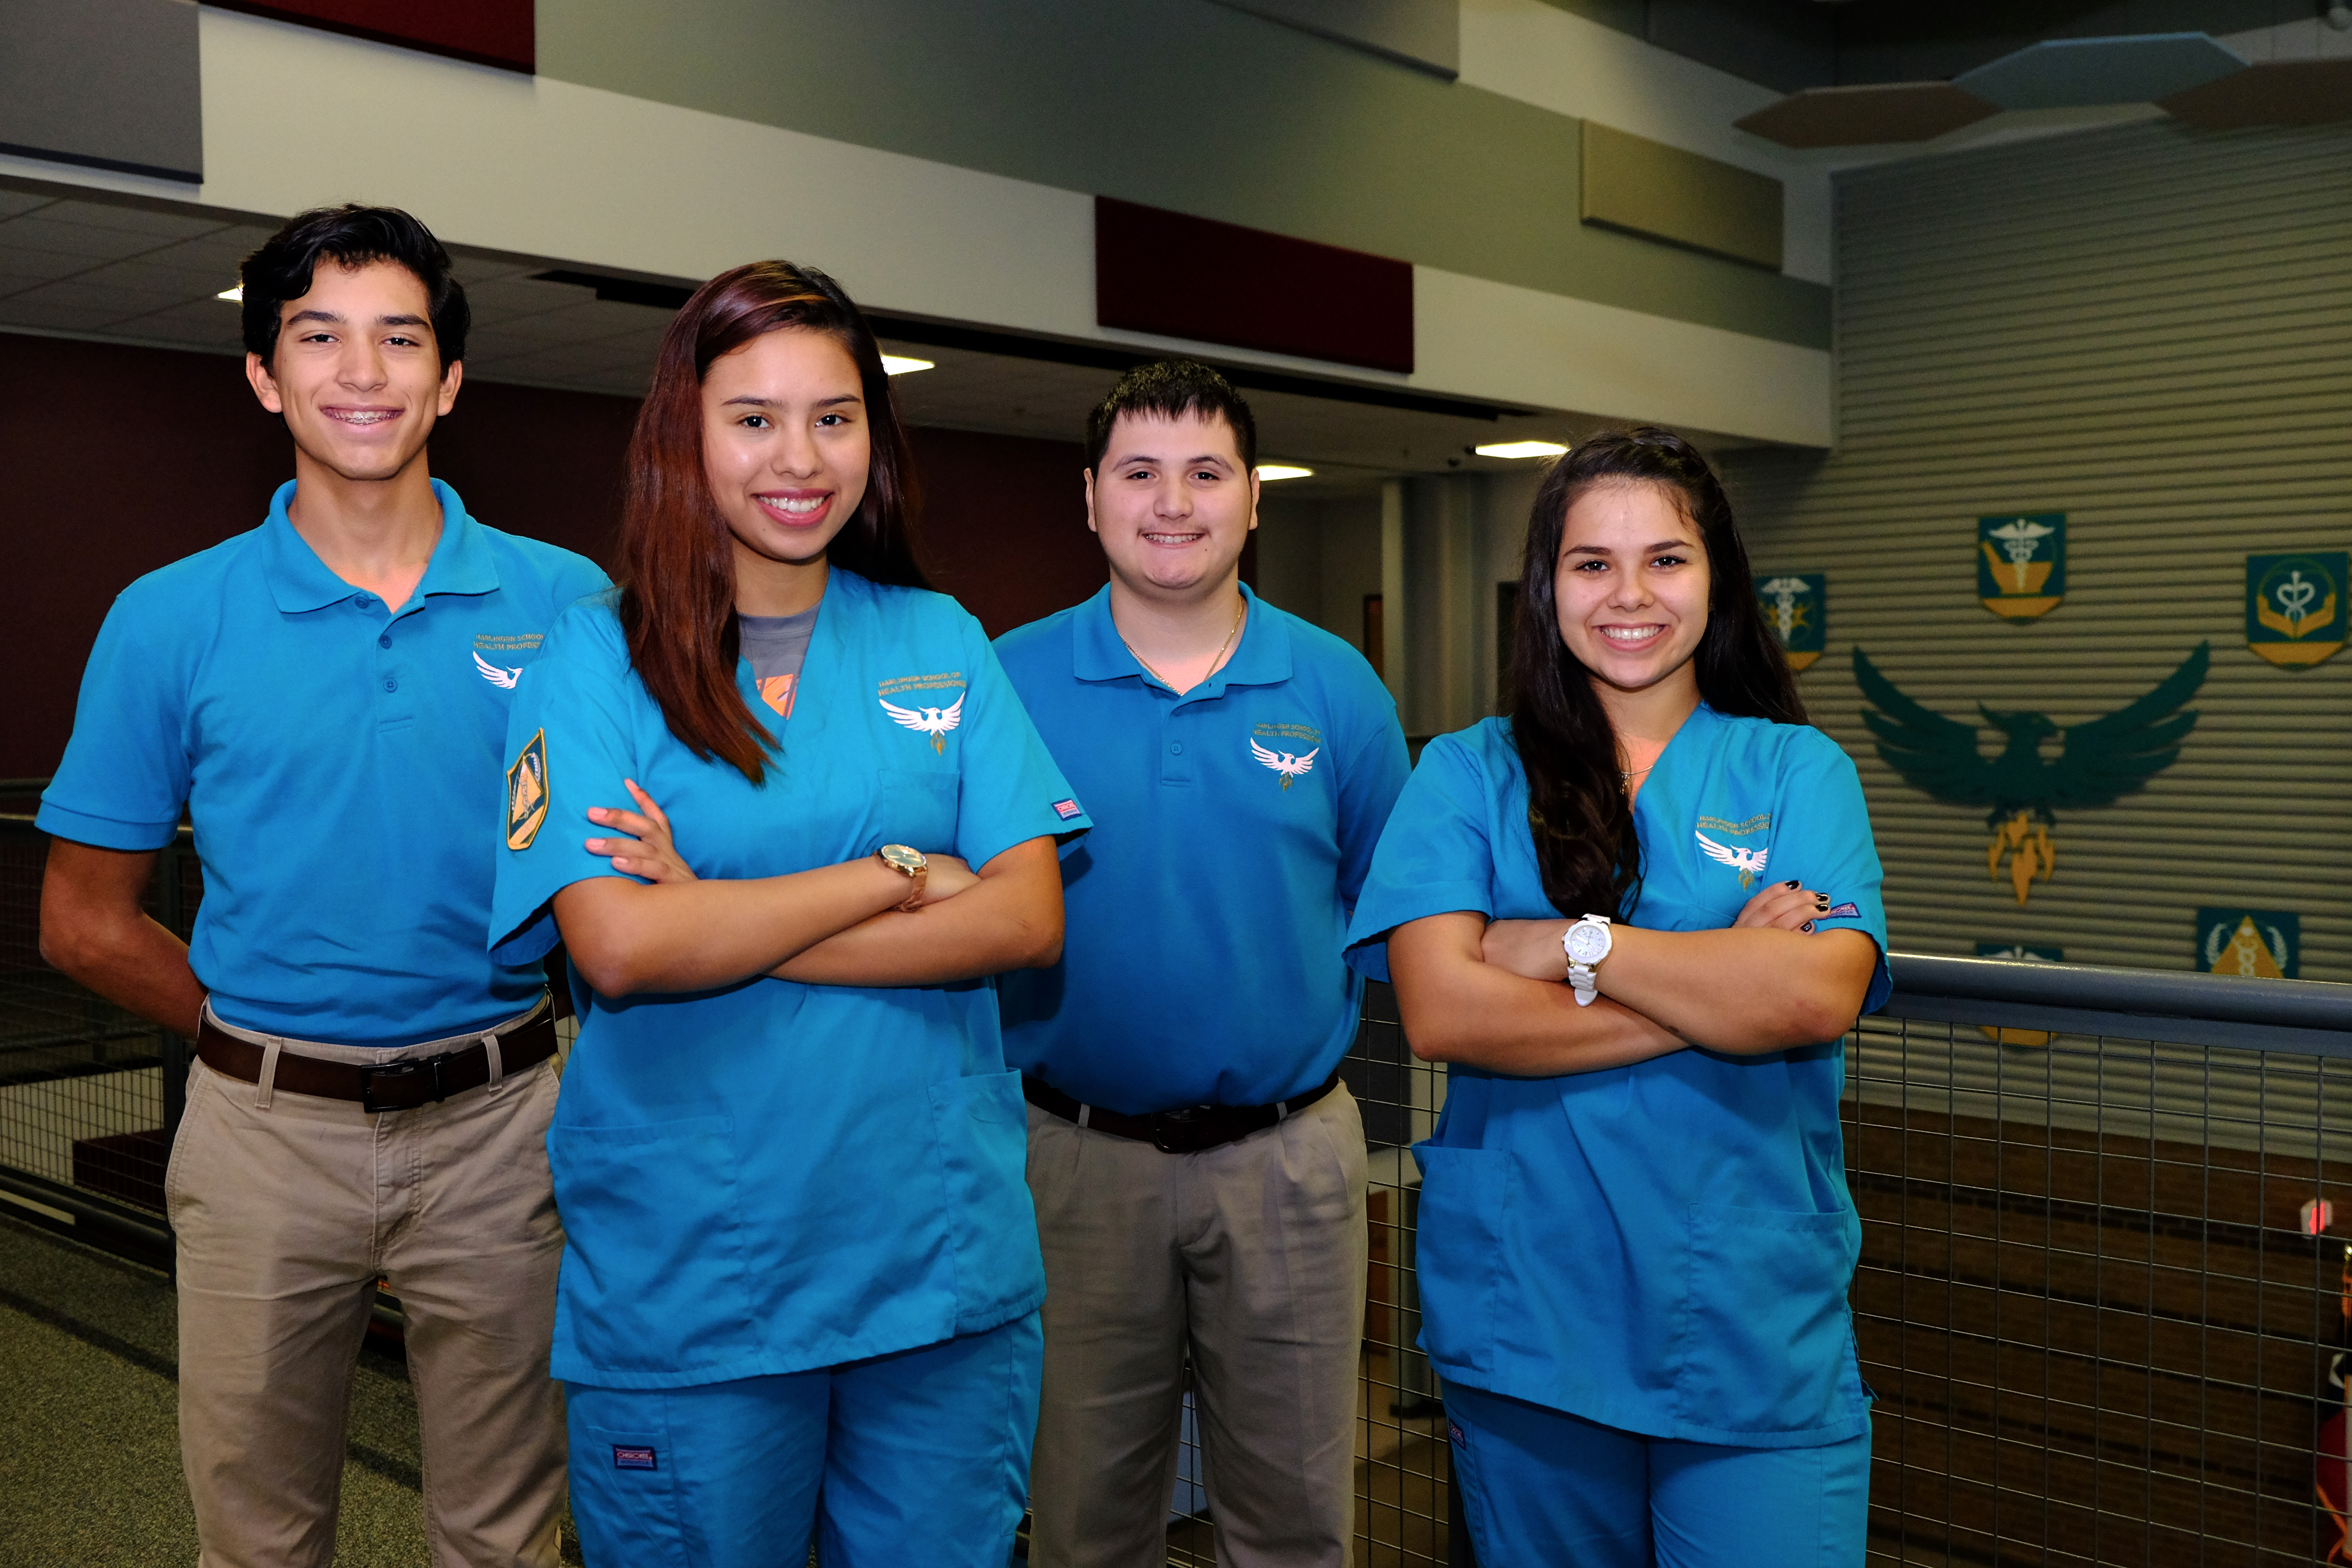 HSHP seniors refine healthcare skills through real-world experience